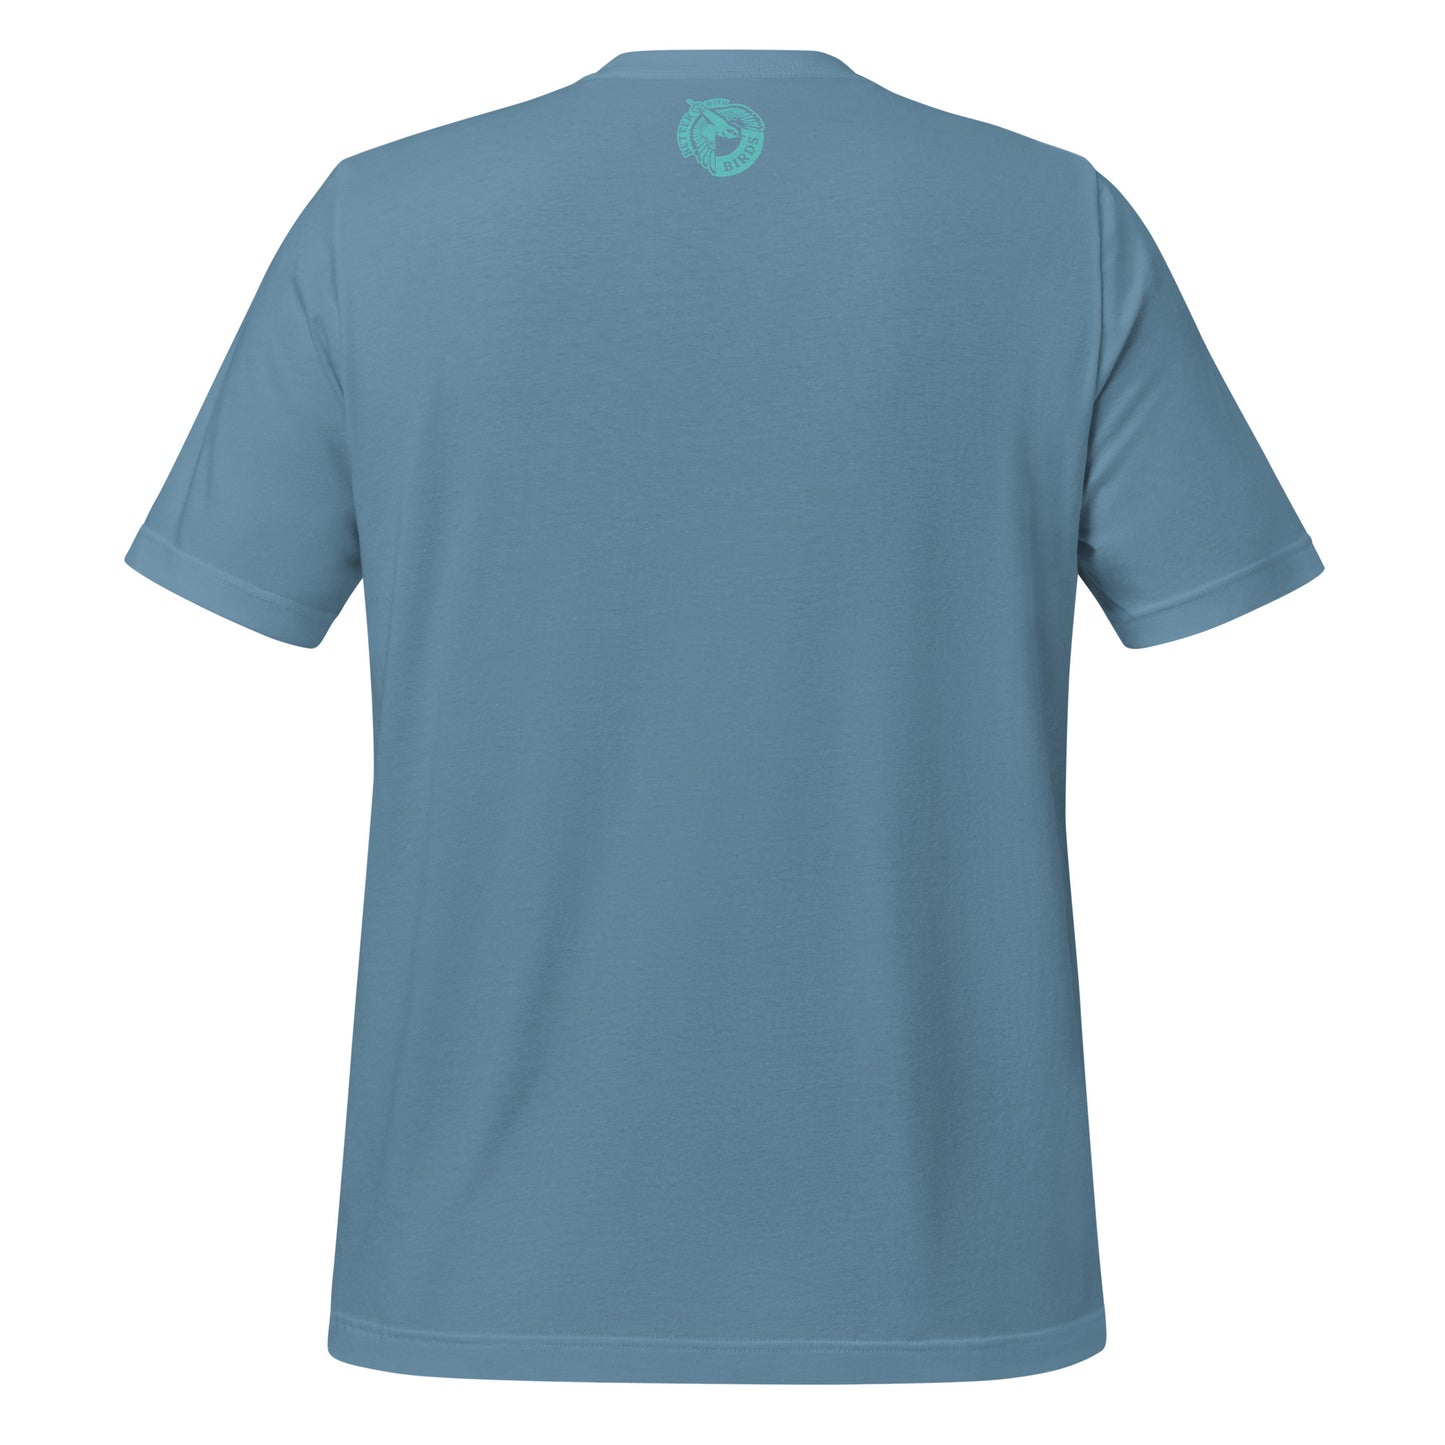 Olive-Sided Flycatcher Lightweight Cotton Unisex T-Shirt